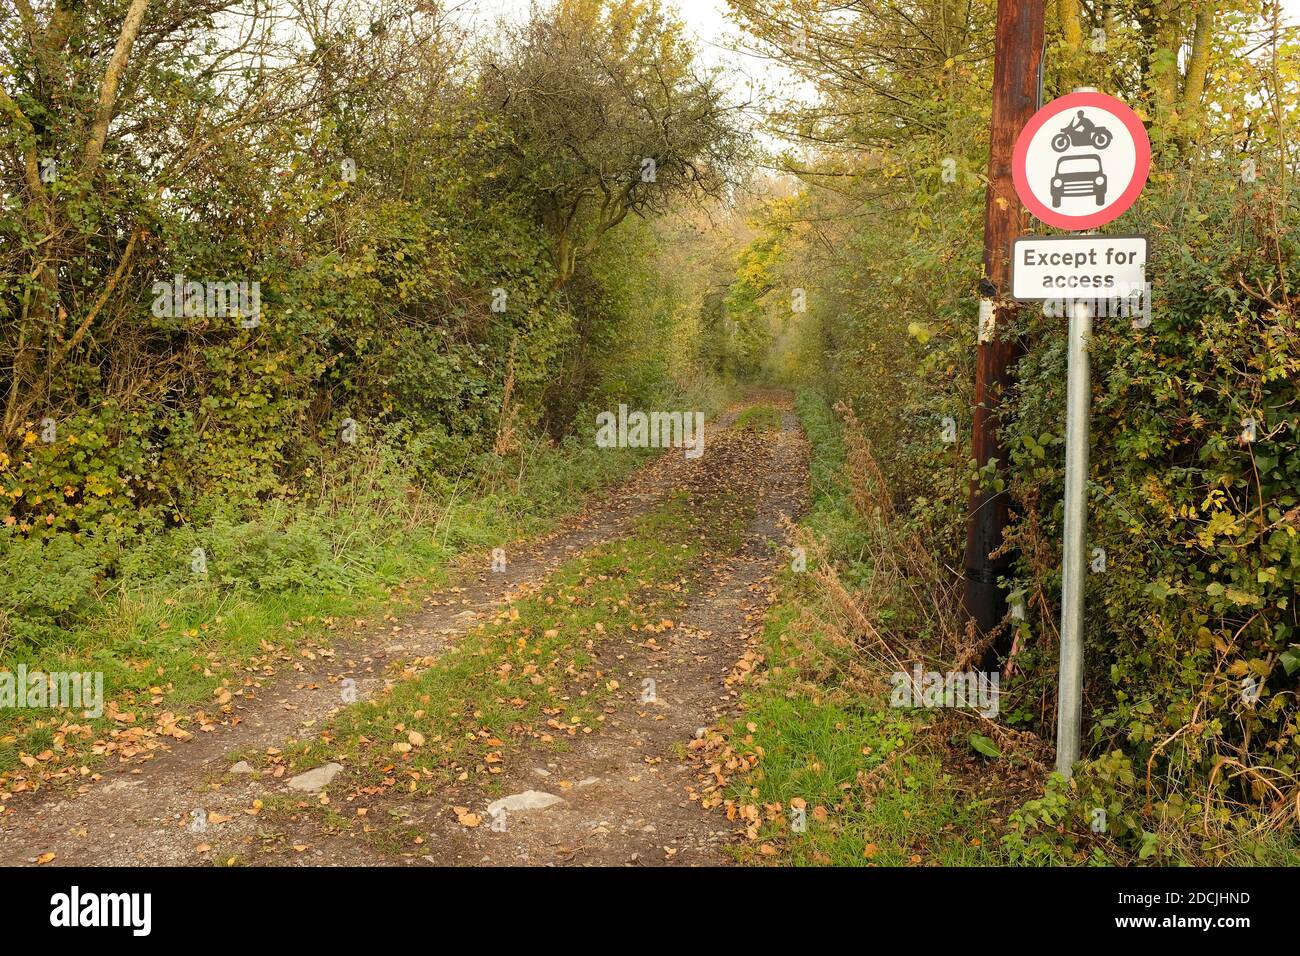 November 2020 - Narrow by way lane restricted use by motorised vehicles Stock Photo